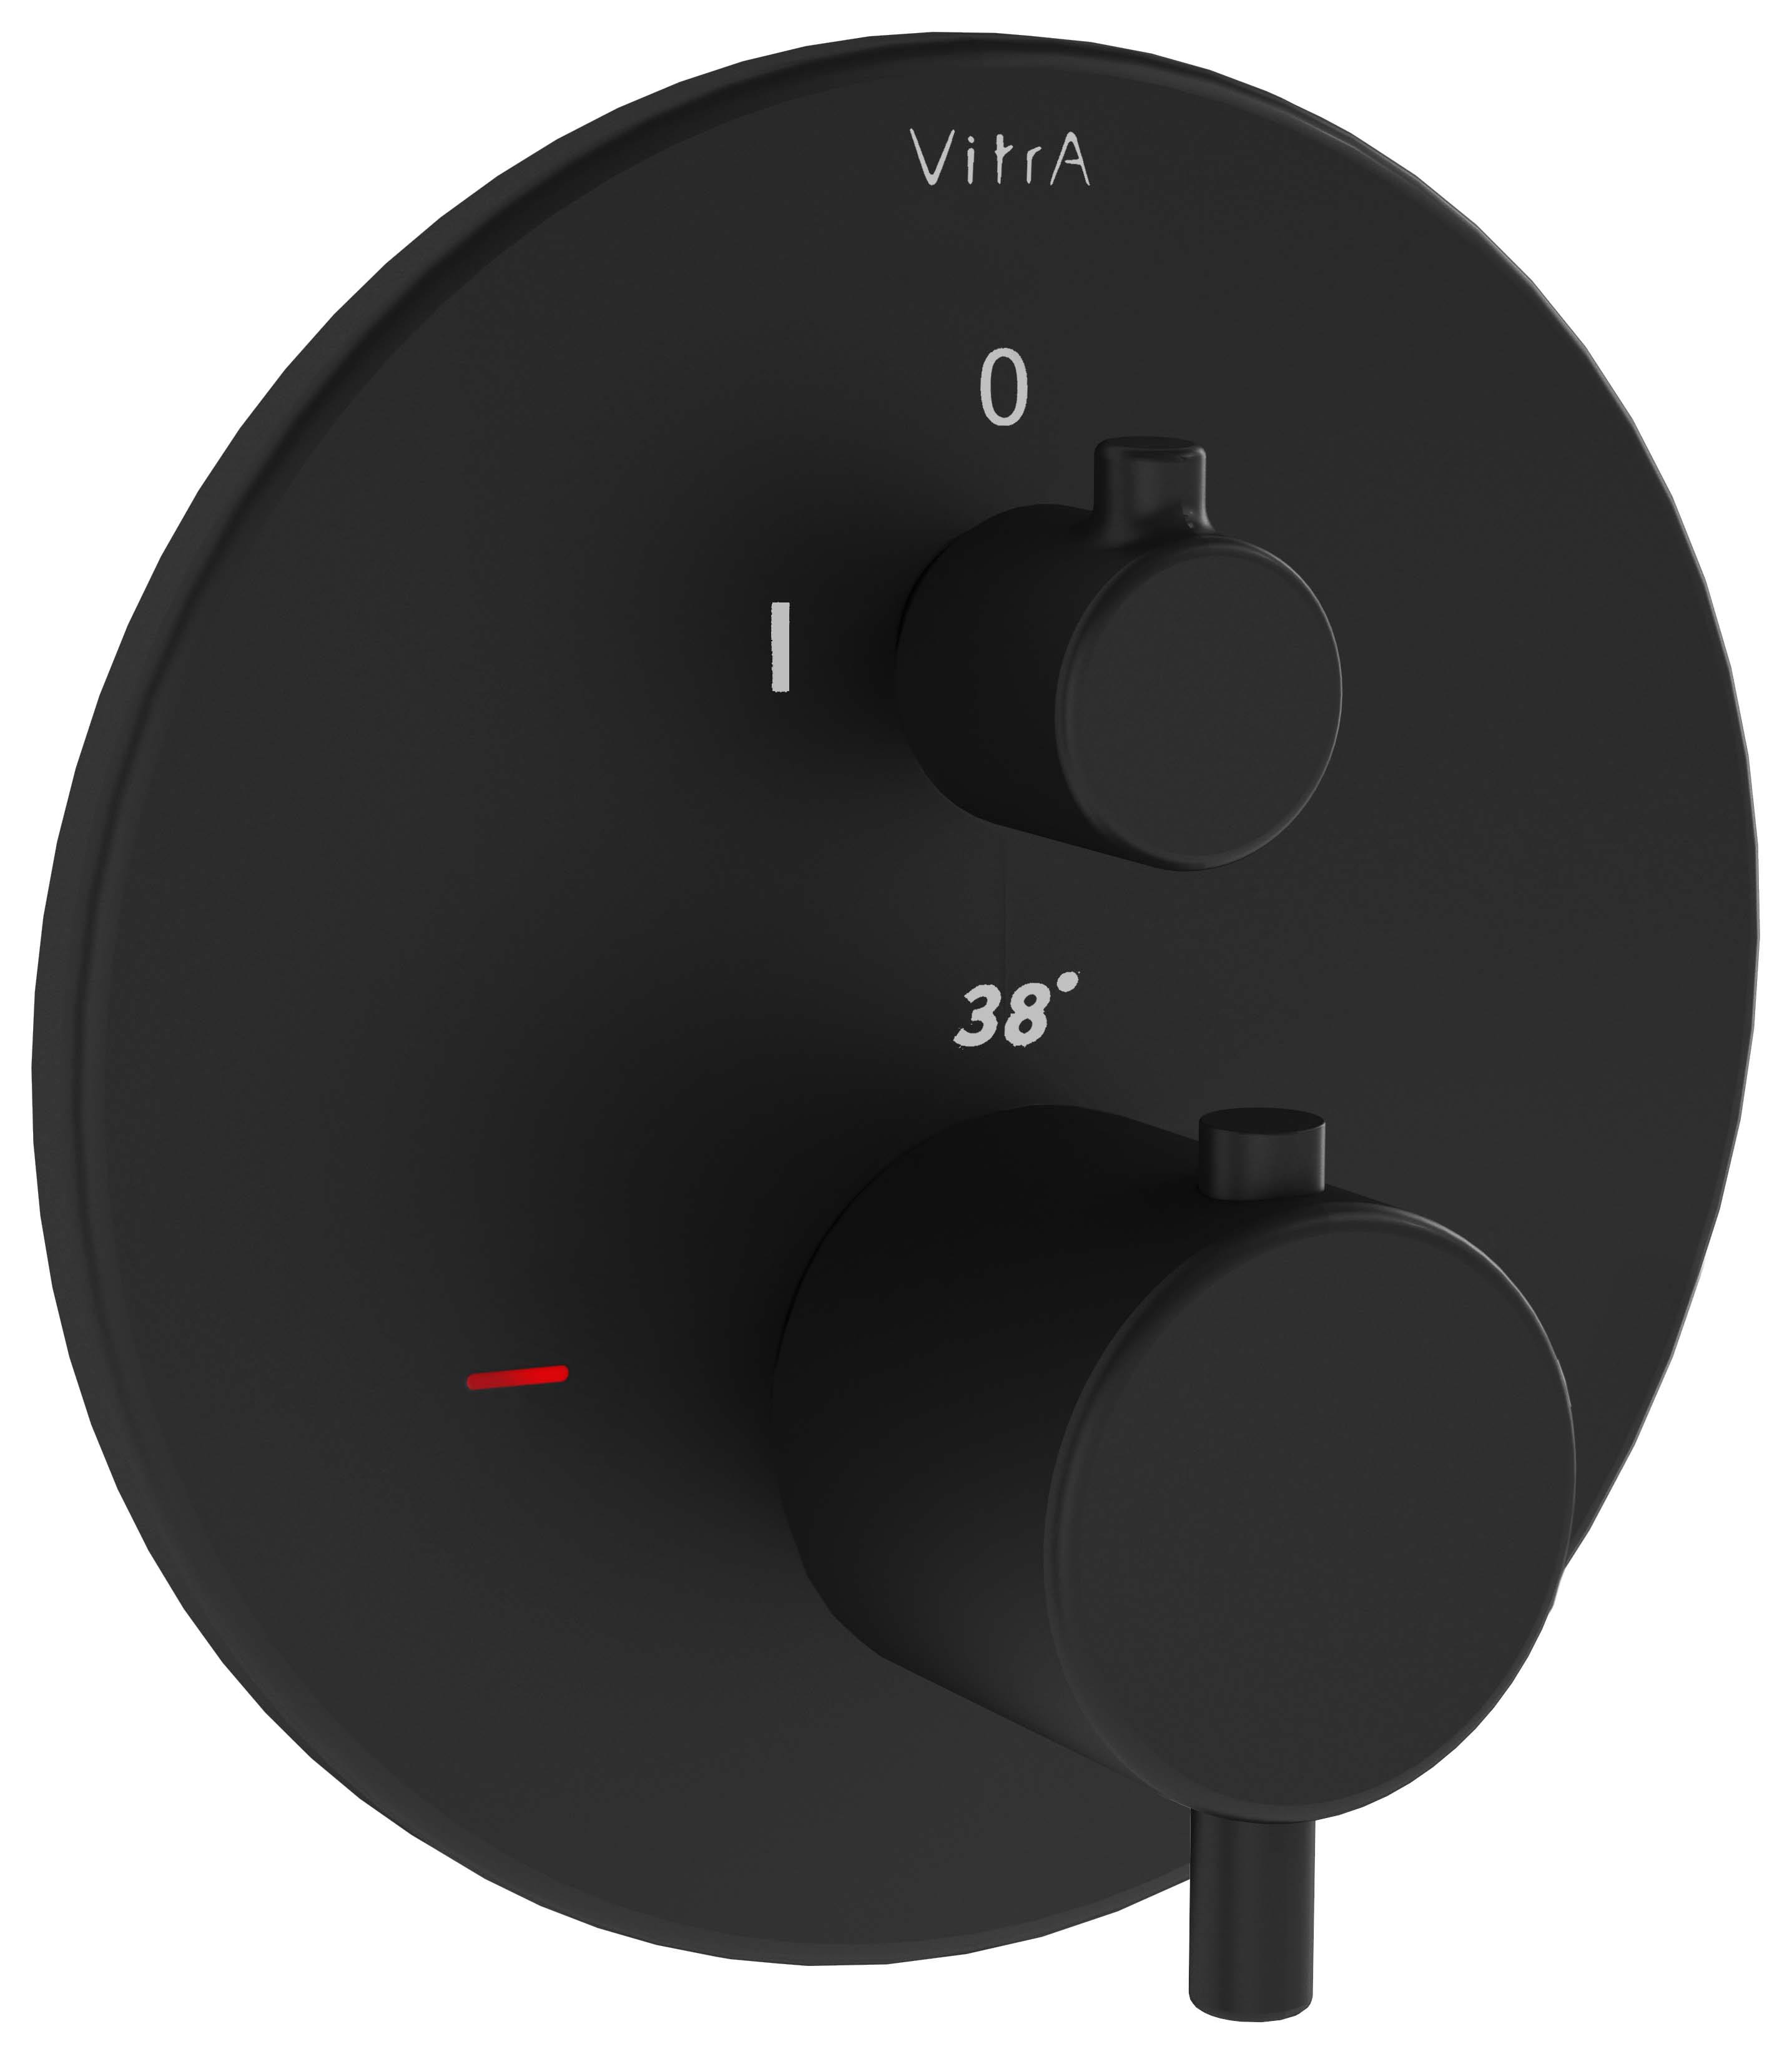 VitrA Origin Round Built-In 1 Way Thermostatic Bath & Shower Mixer Valve - Matt Black